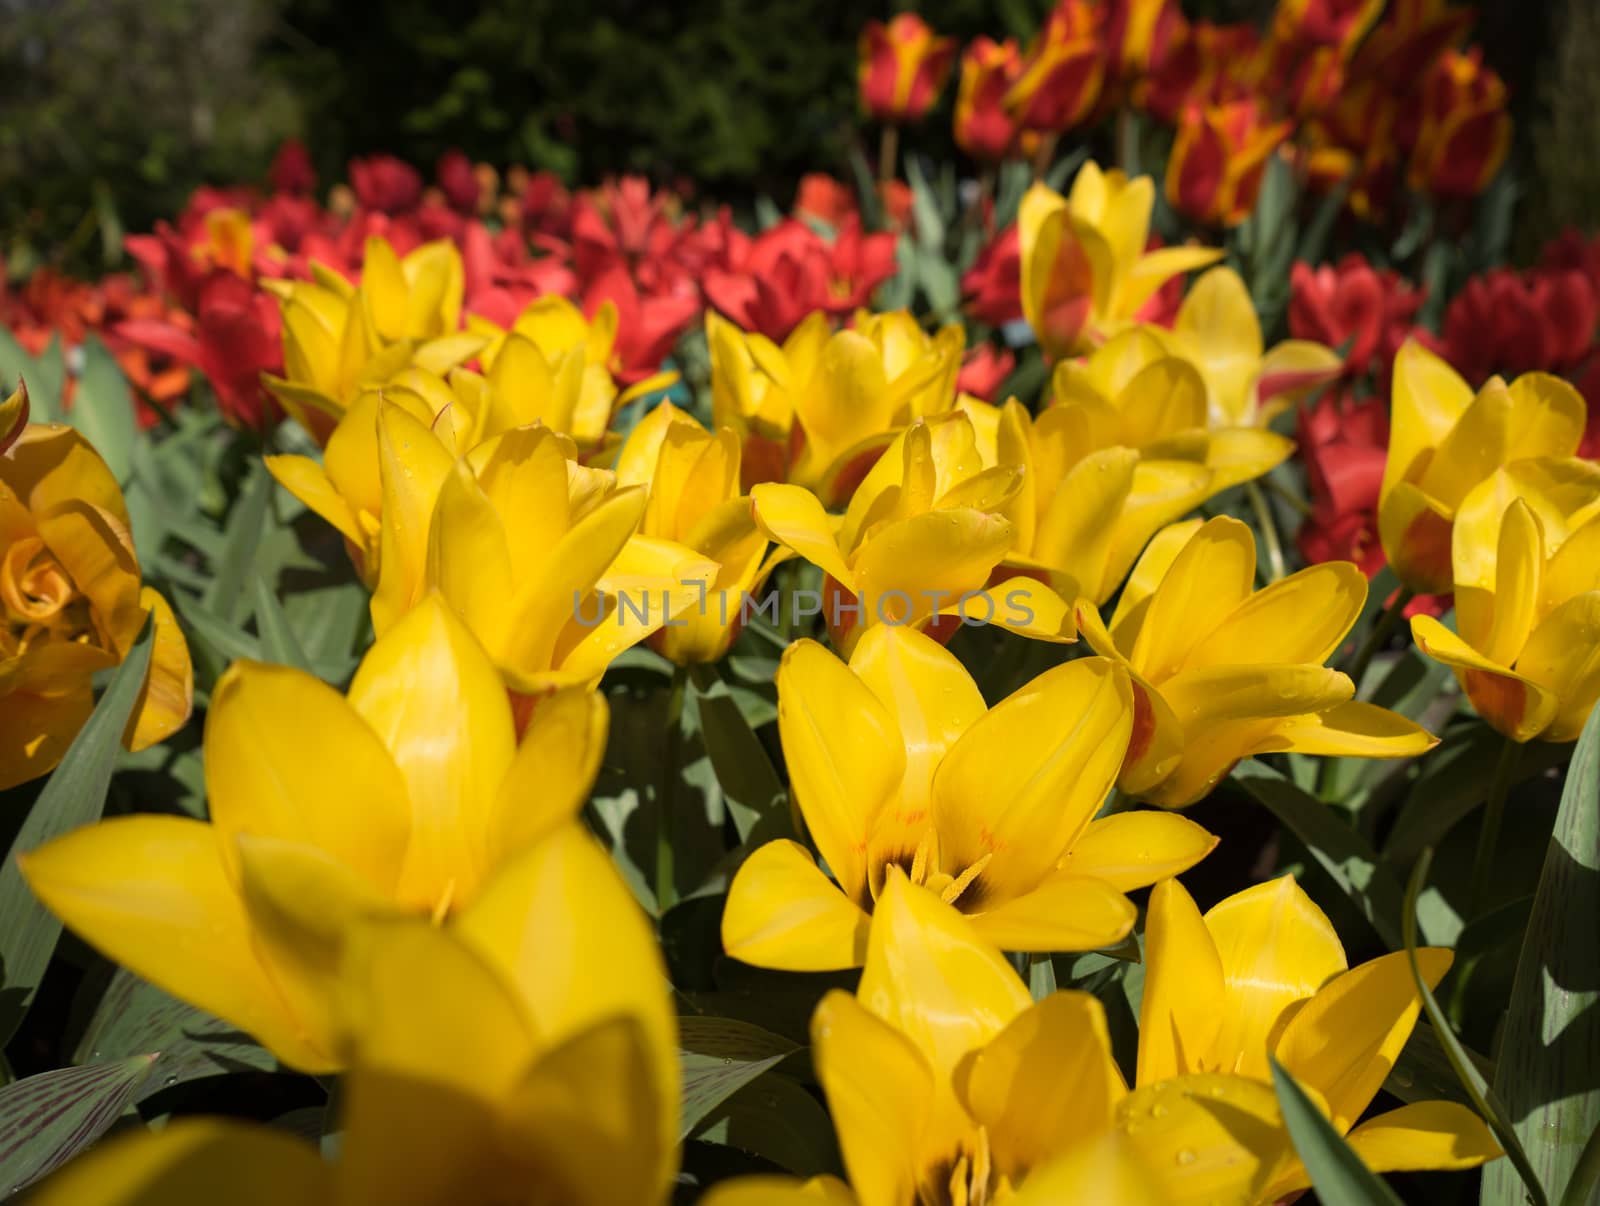 Bella Vista Yellow tulips in a garden in Lisse, Netherlands, Eur by ramana16